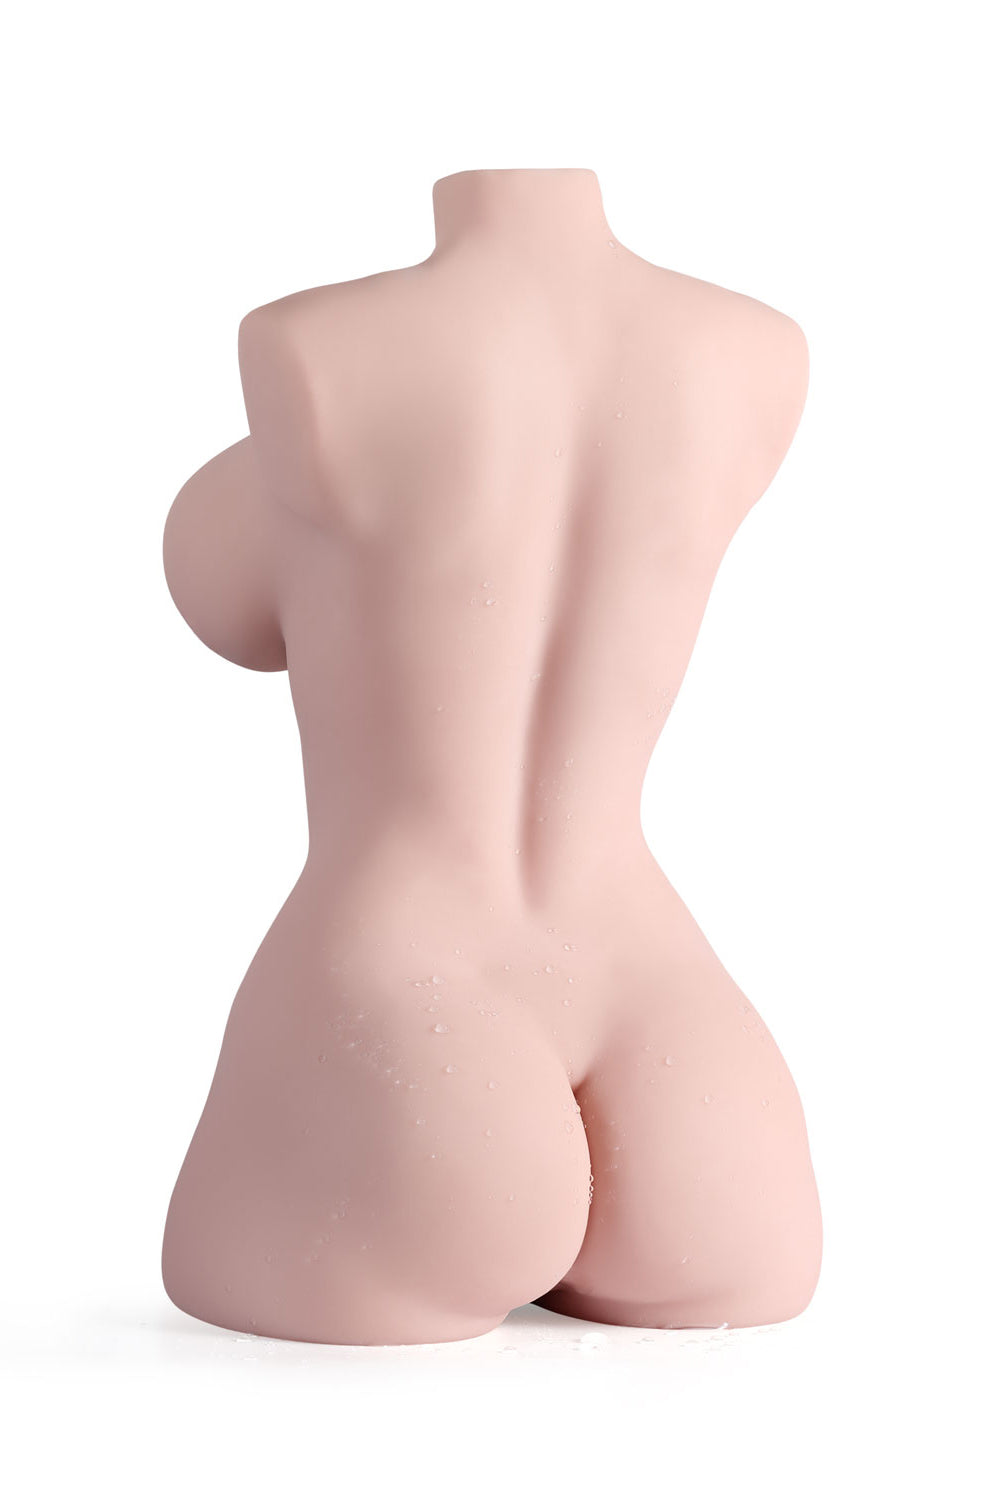 US Stock - 19 lbs Best Masturbator Sex Doll Torso TPE Half Body Love Doll with Realistic Skin Texture